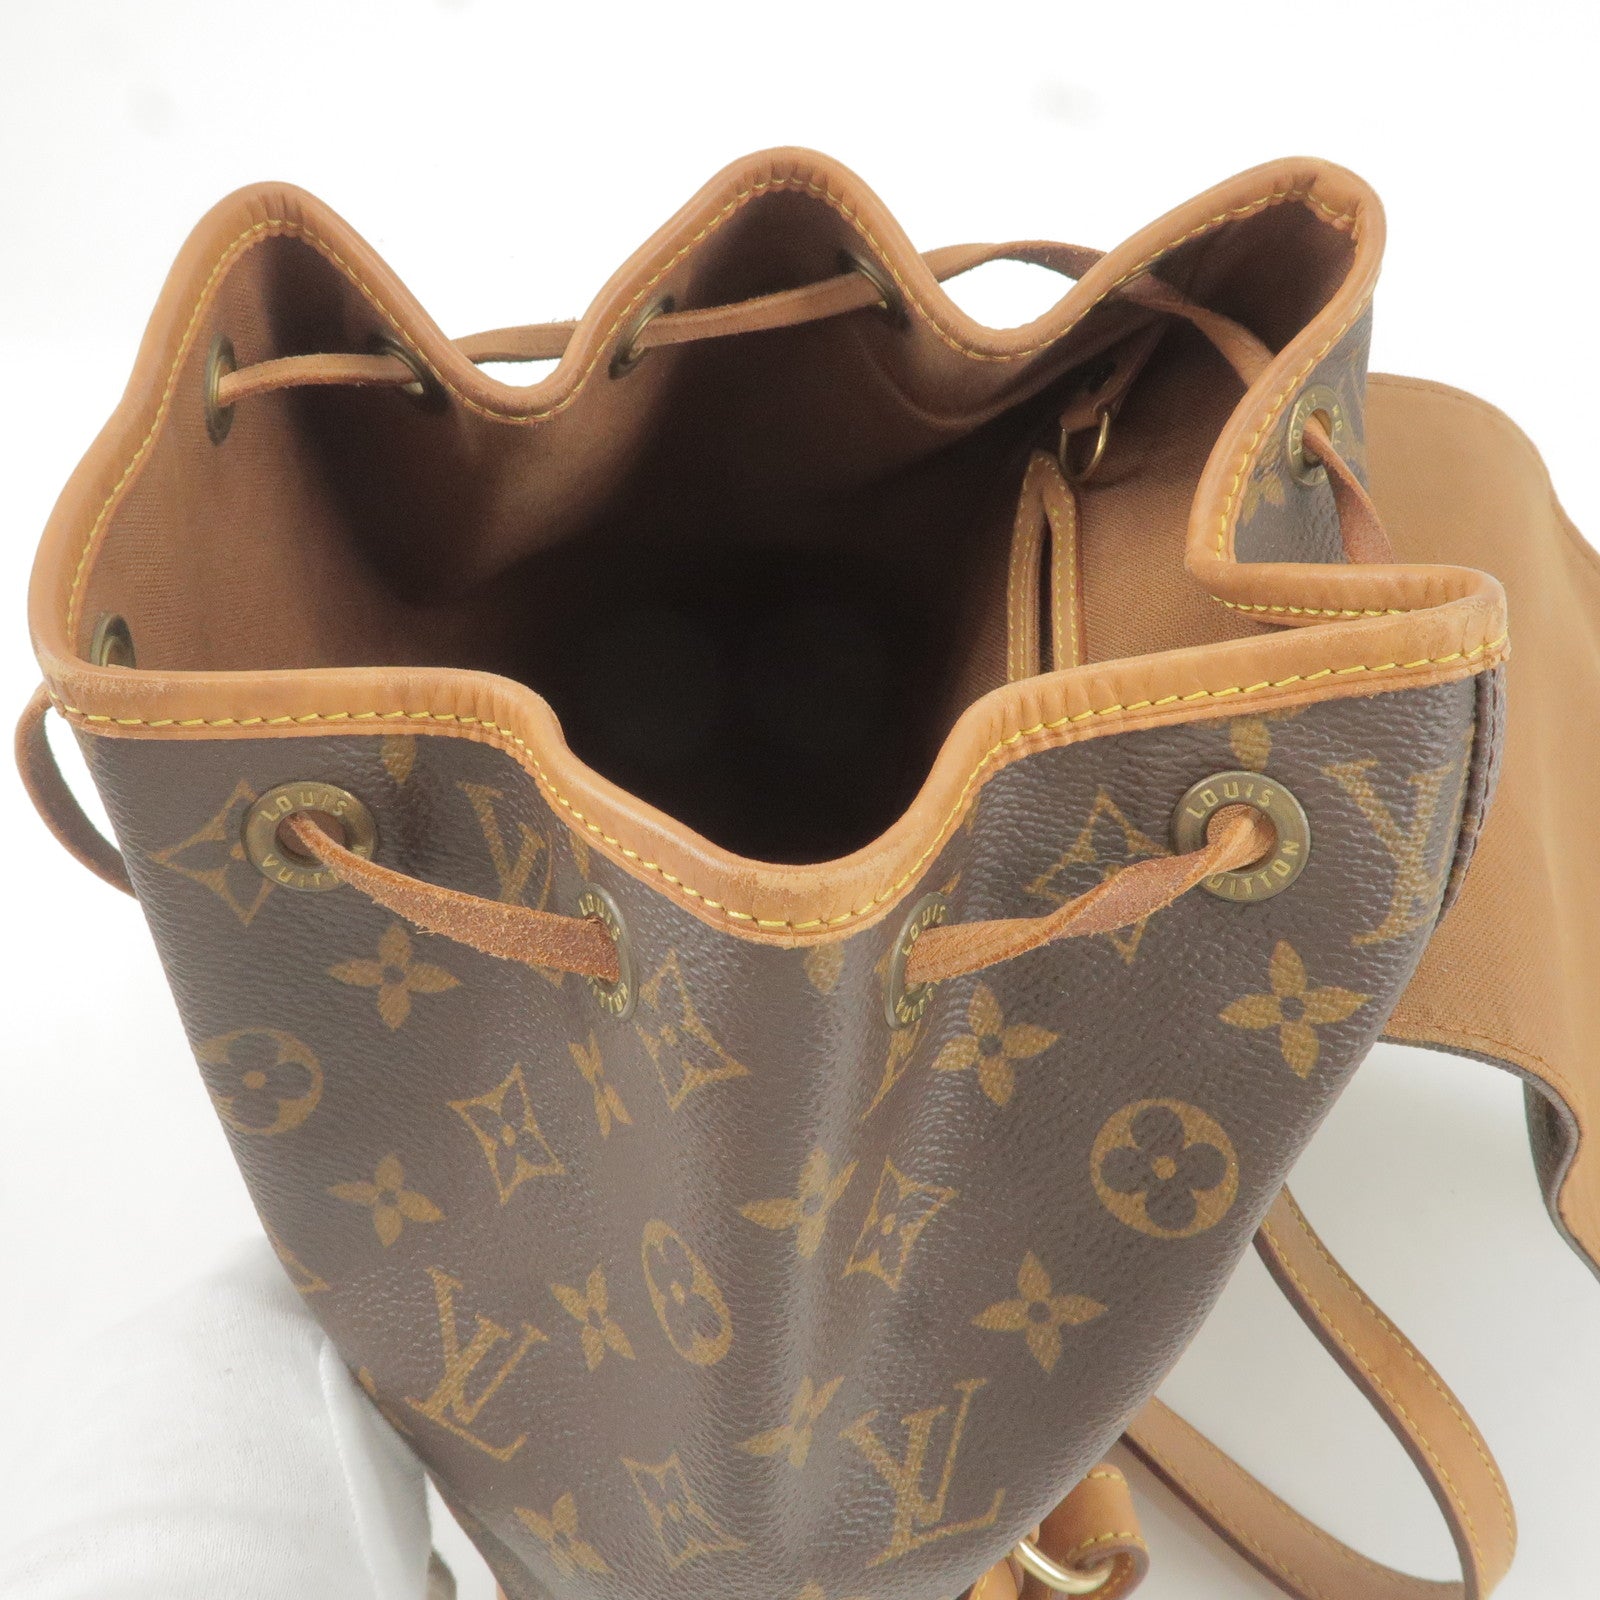 Louis Vuitton 2000 Pre-owned Monogram Speedy 30 Handbag - Brown